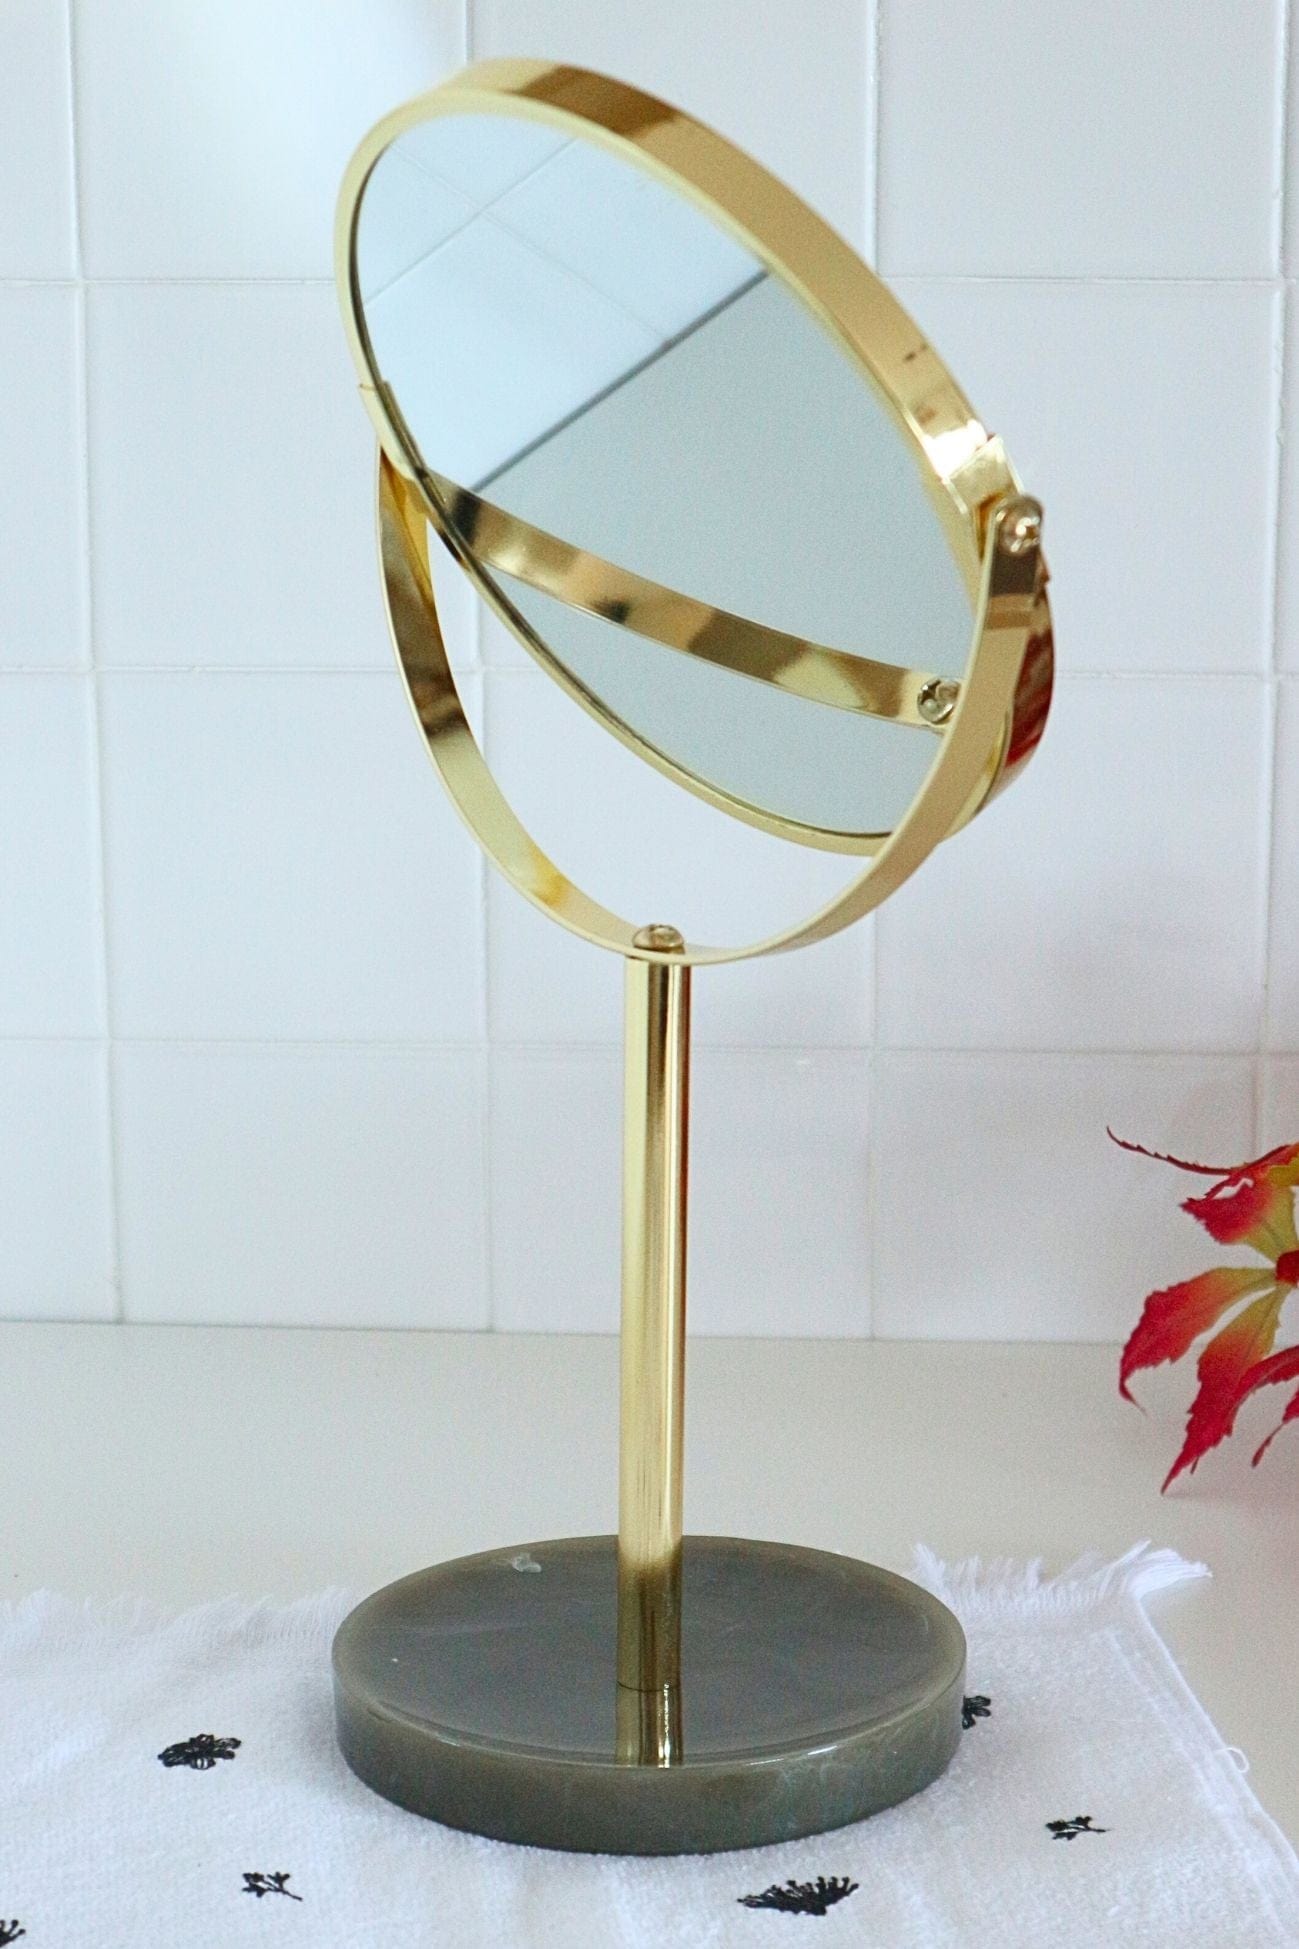 Item International Jibaro Jibaro - Specchio tondo con base in resina dorata e finiture dorate | Item International